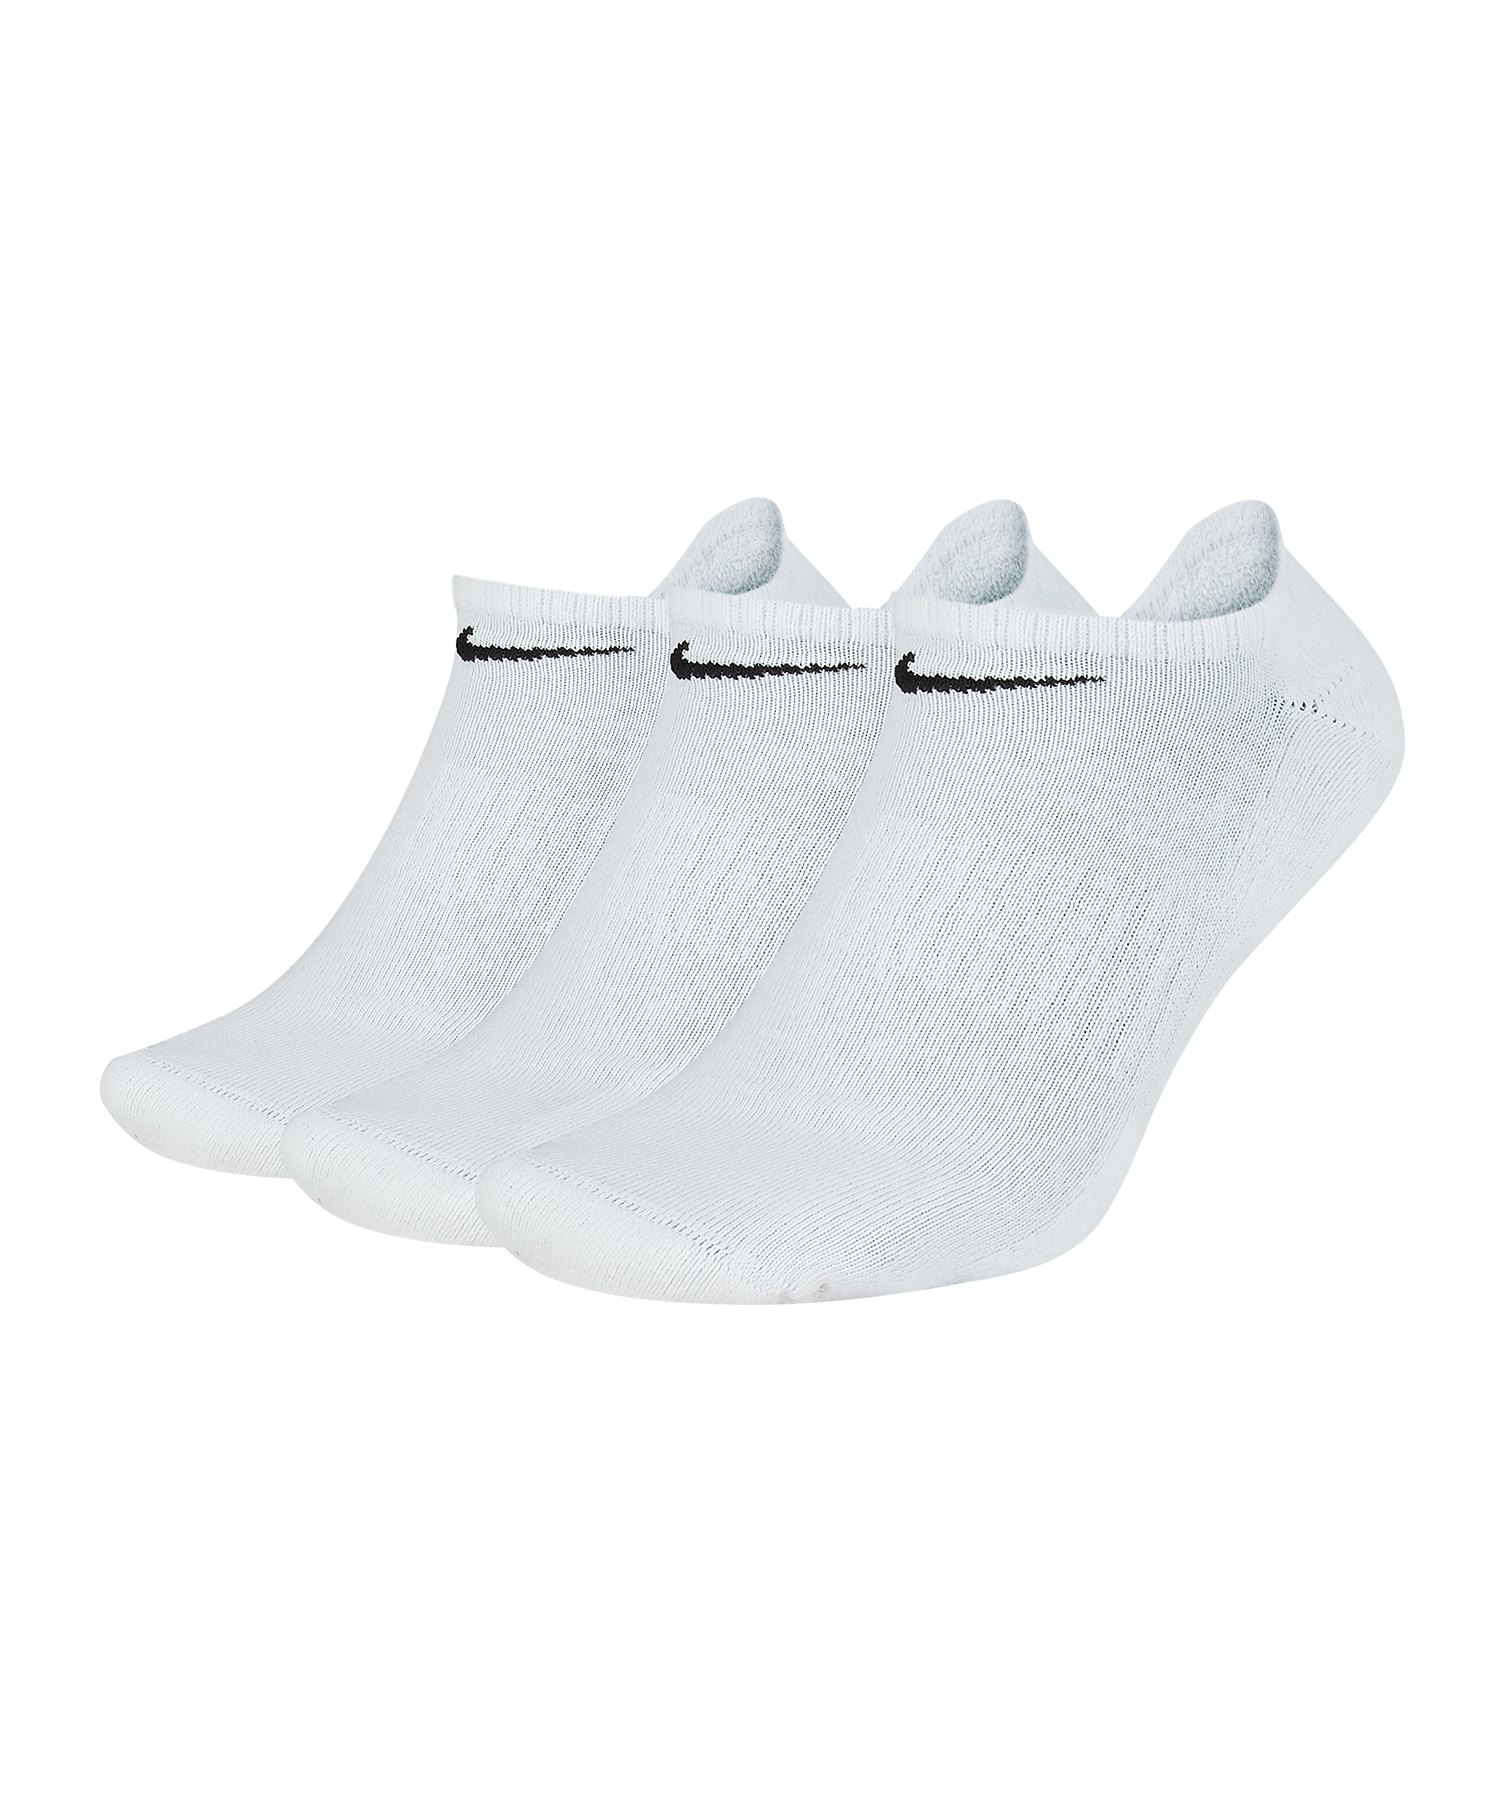 Nike Everyday Cushion No-Show Socken 3er Pack F100 - Weiss